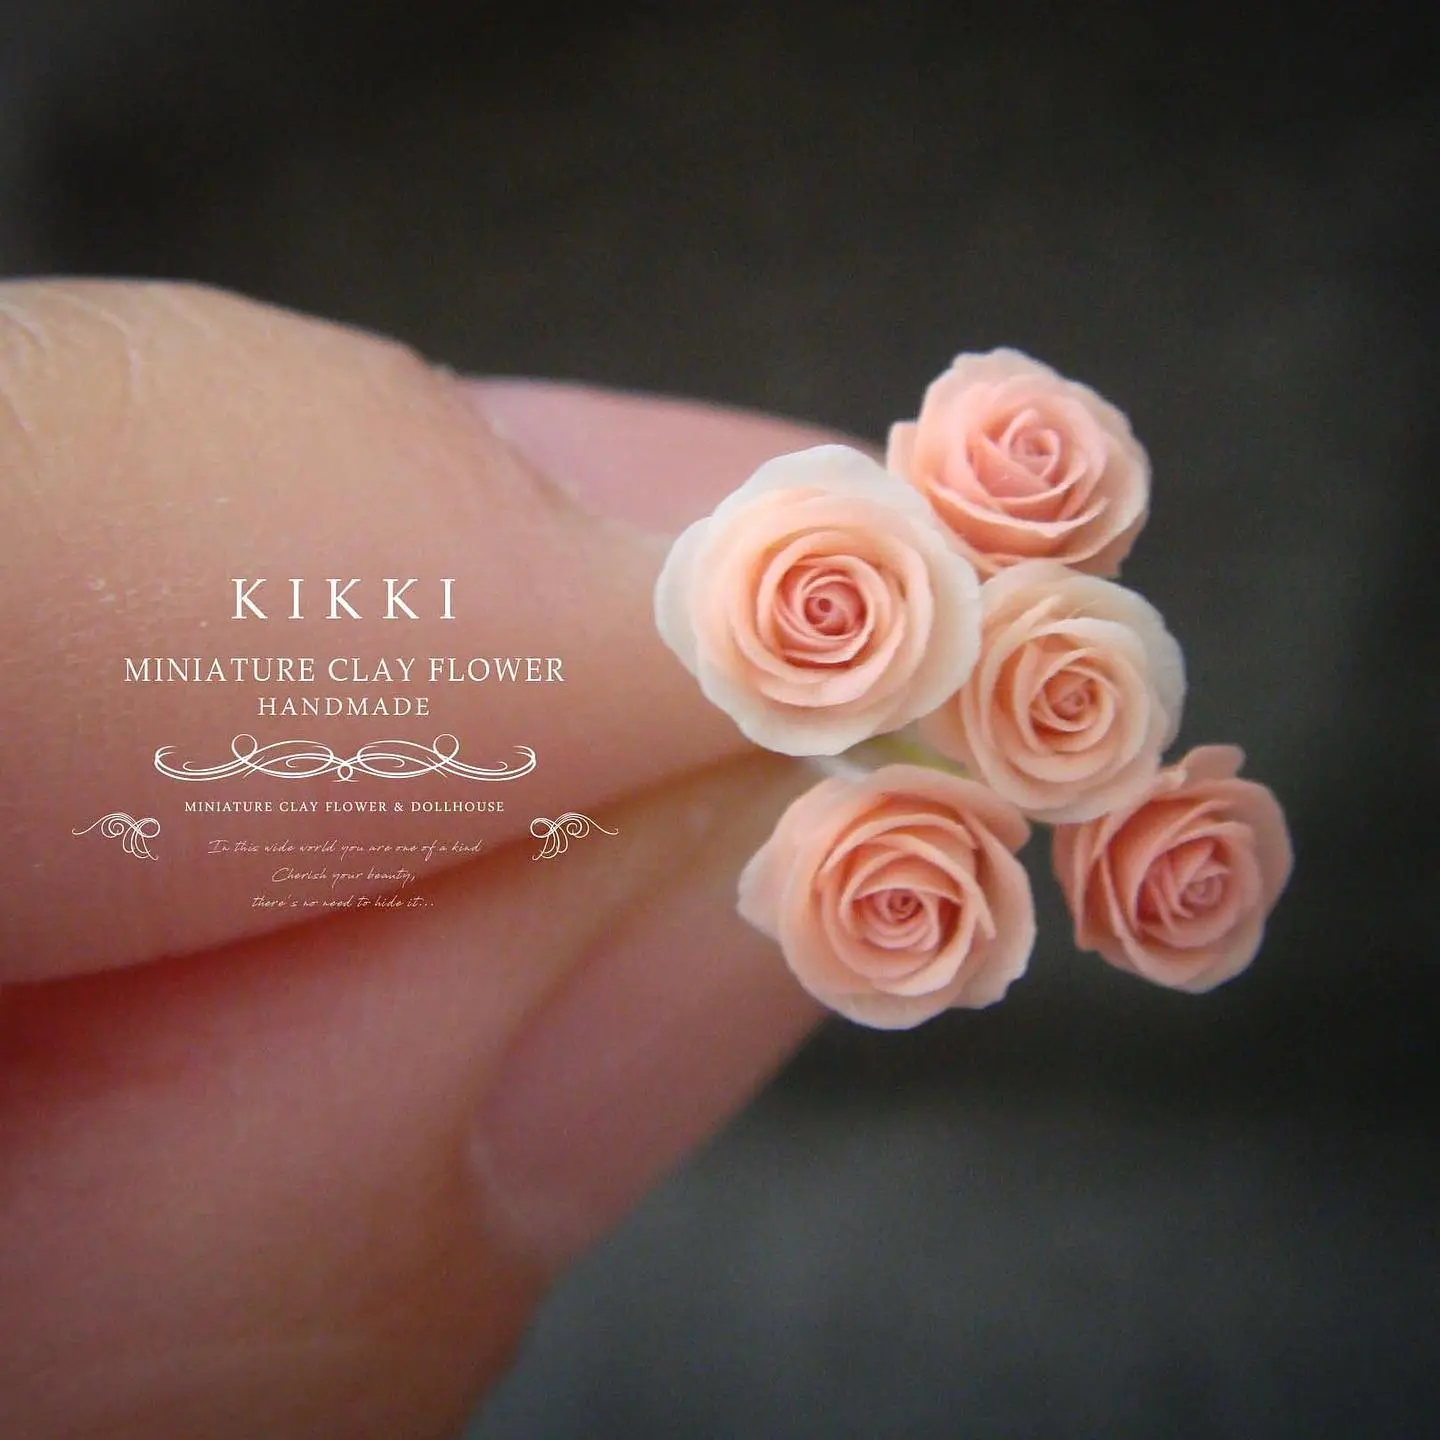 KIKKI's Art: A World of Miniature Wonders by Sanae Hirabara